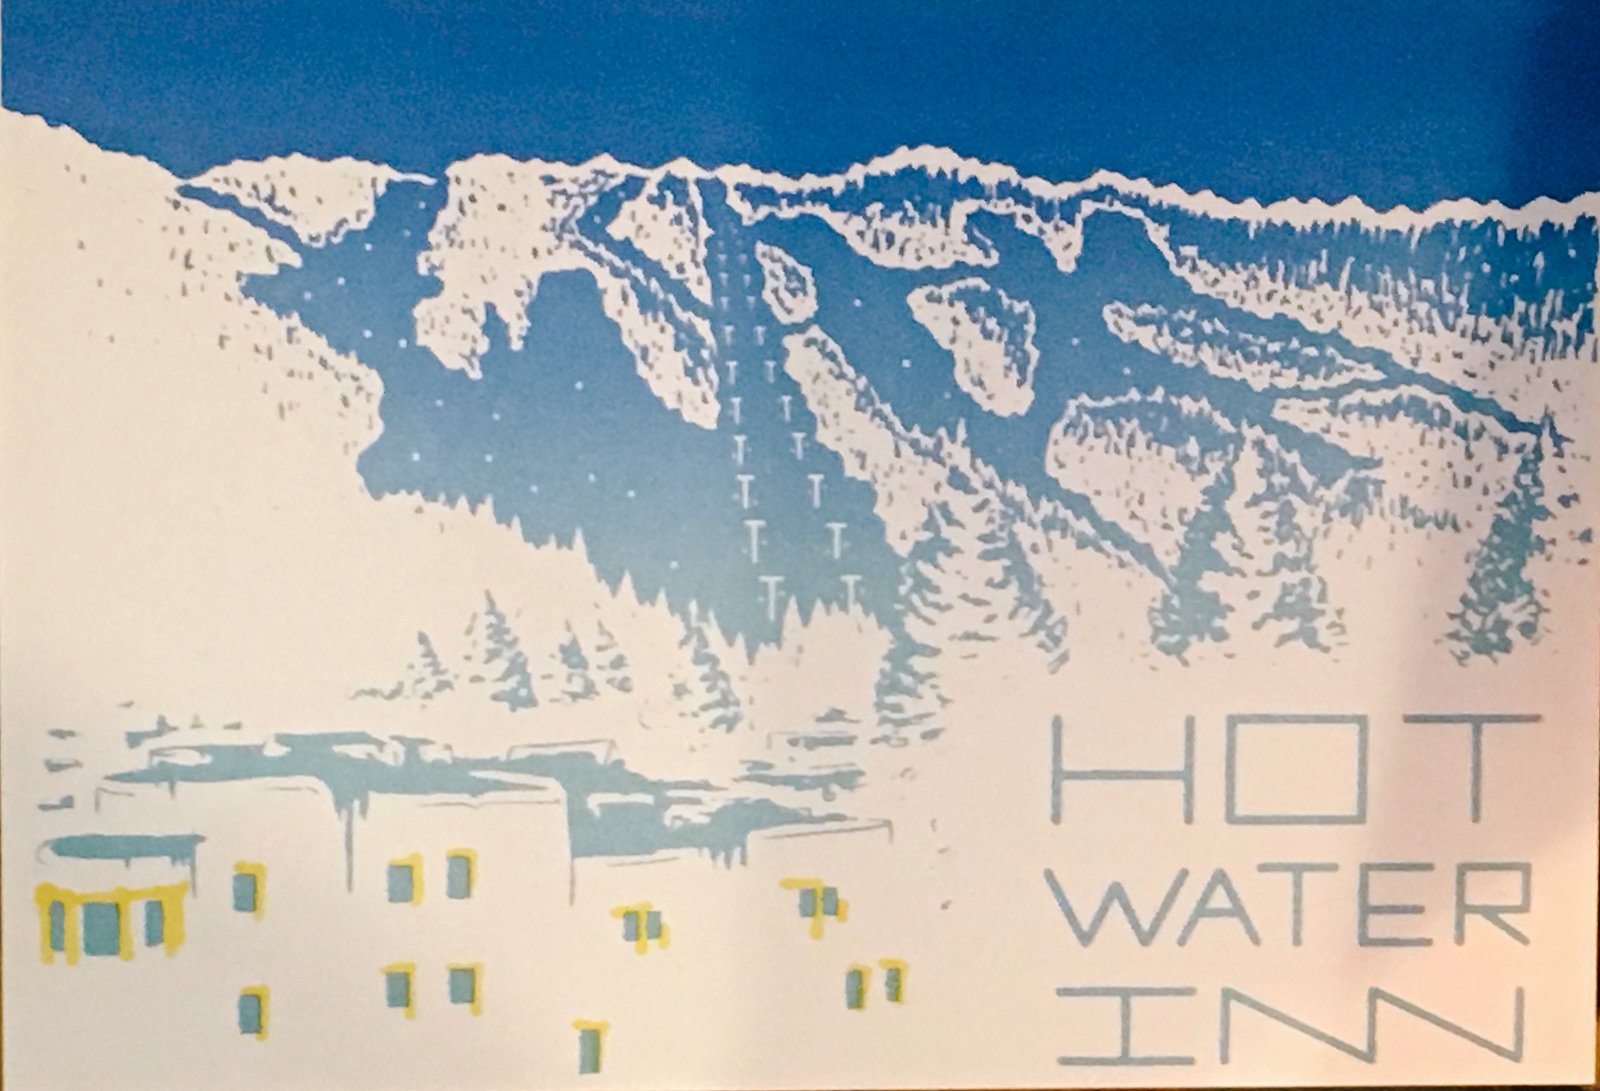 Hot Water Inn Artwork - Ketchum, Idaho